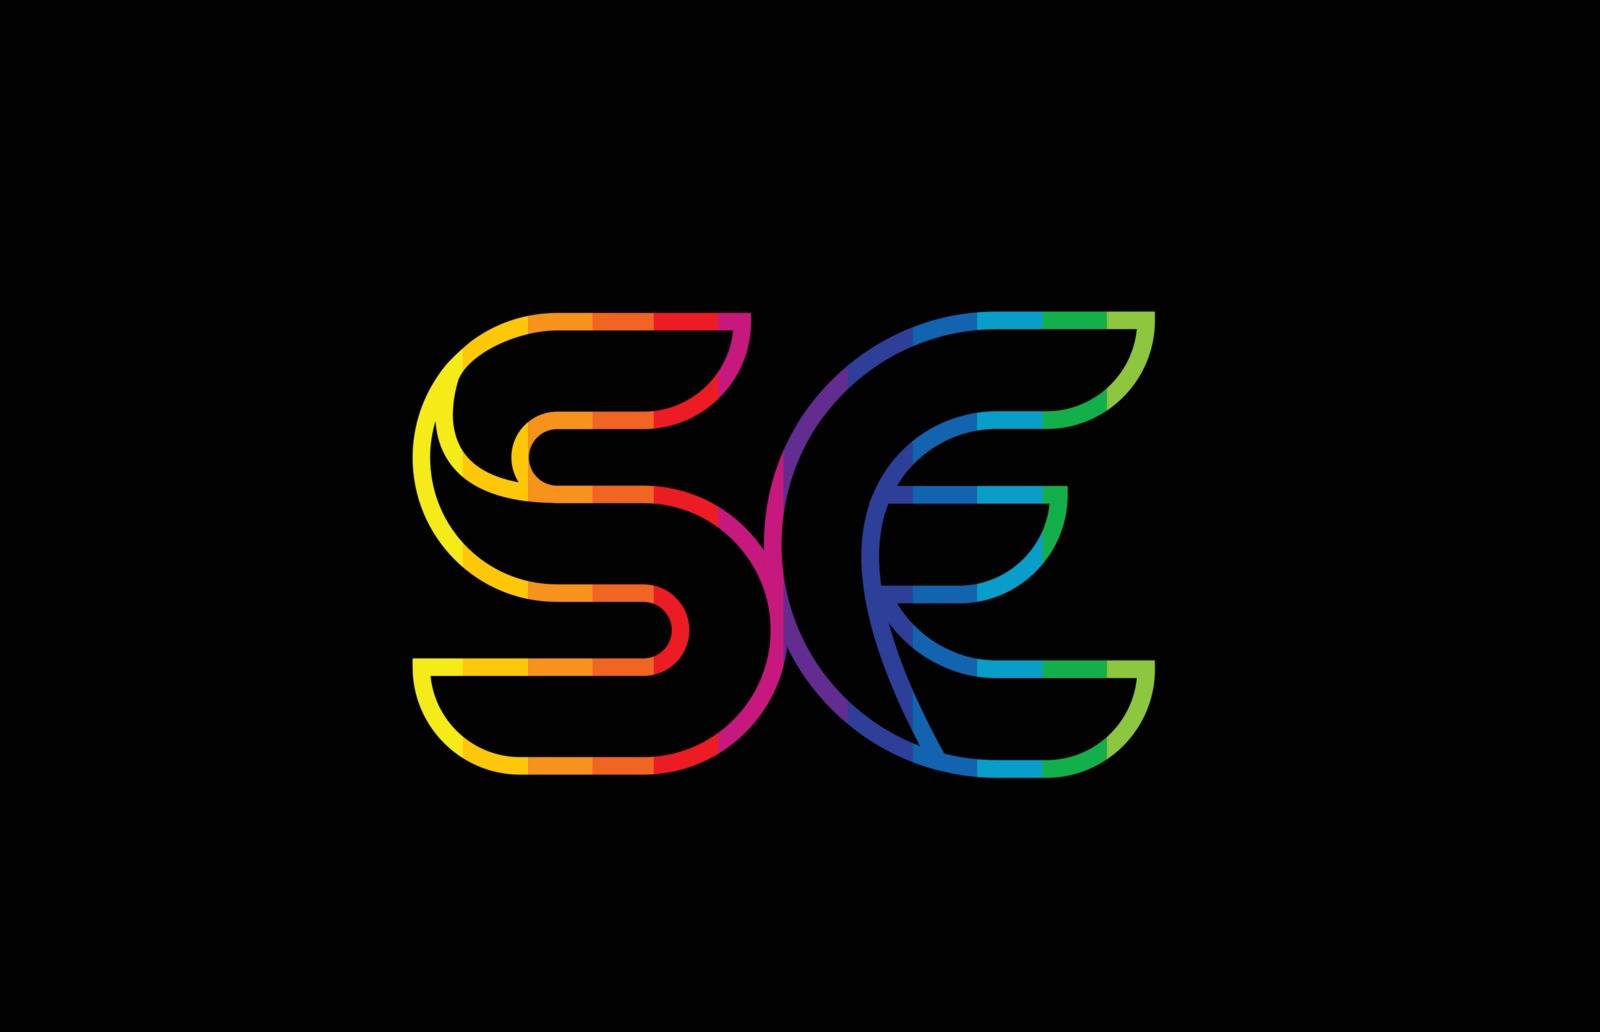 rainbow color colored colorful alphabet letter se s e logo combination design suitable for a company or business